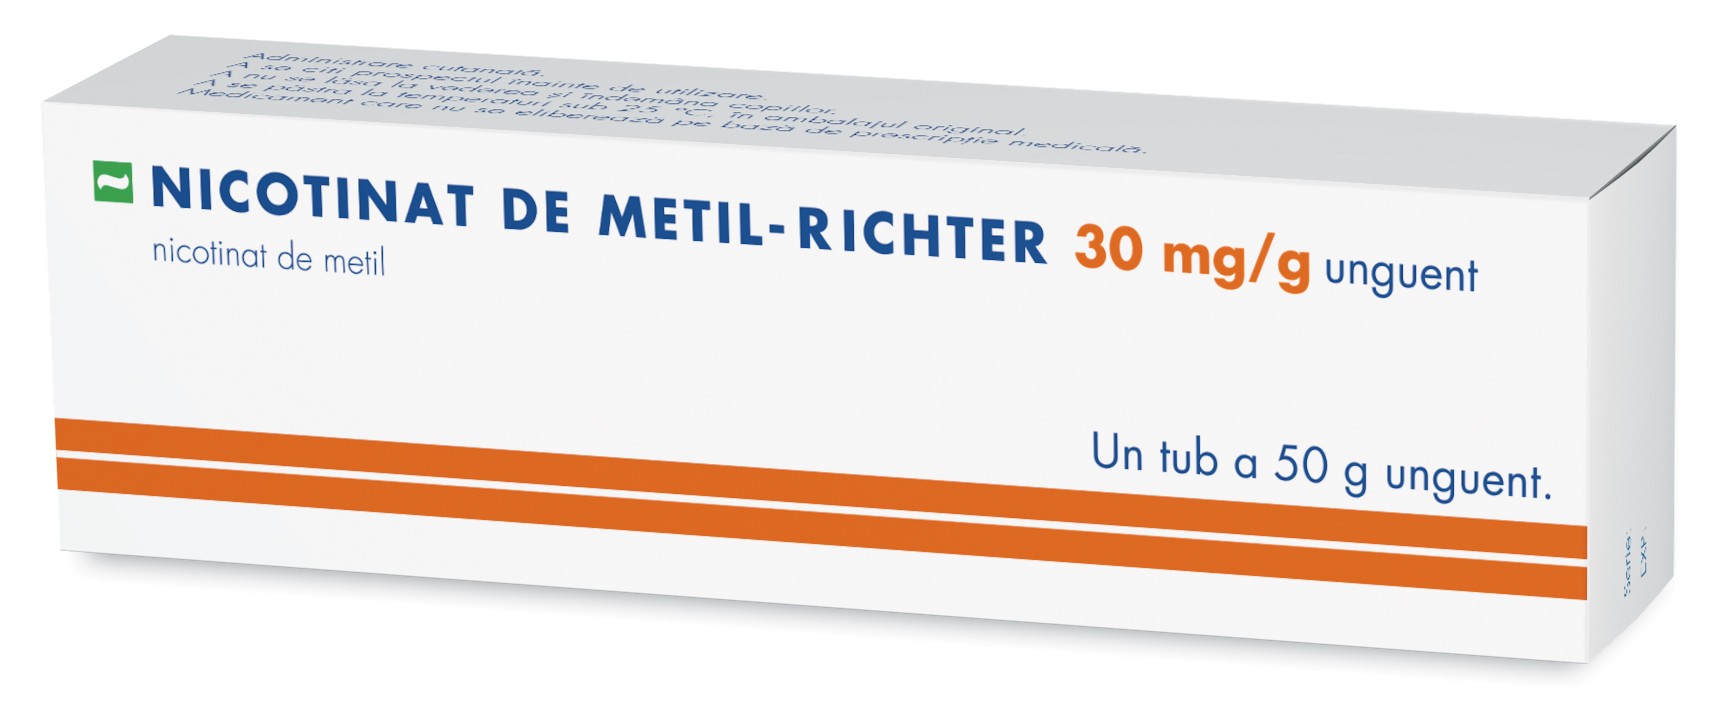 Medicamente fără prescripție medicală - NICOTINAT DE METIL RICHTER 30mg/g x 1 UNGUENT 30mg/g GEDEON RICHTER ROMAN, axafarm.ro